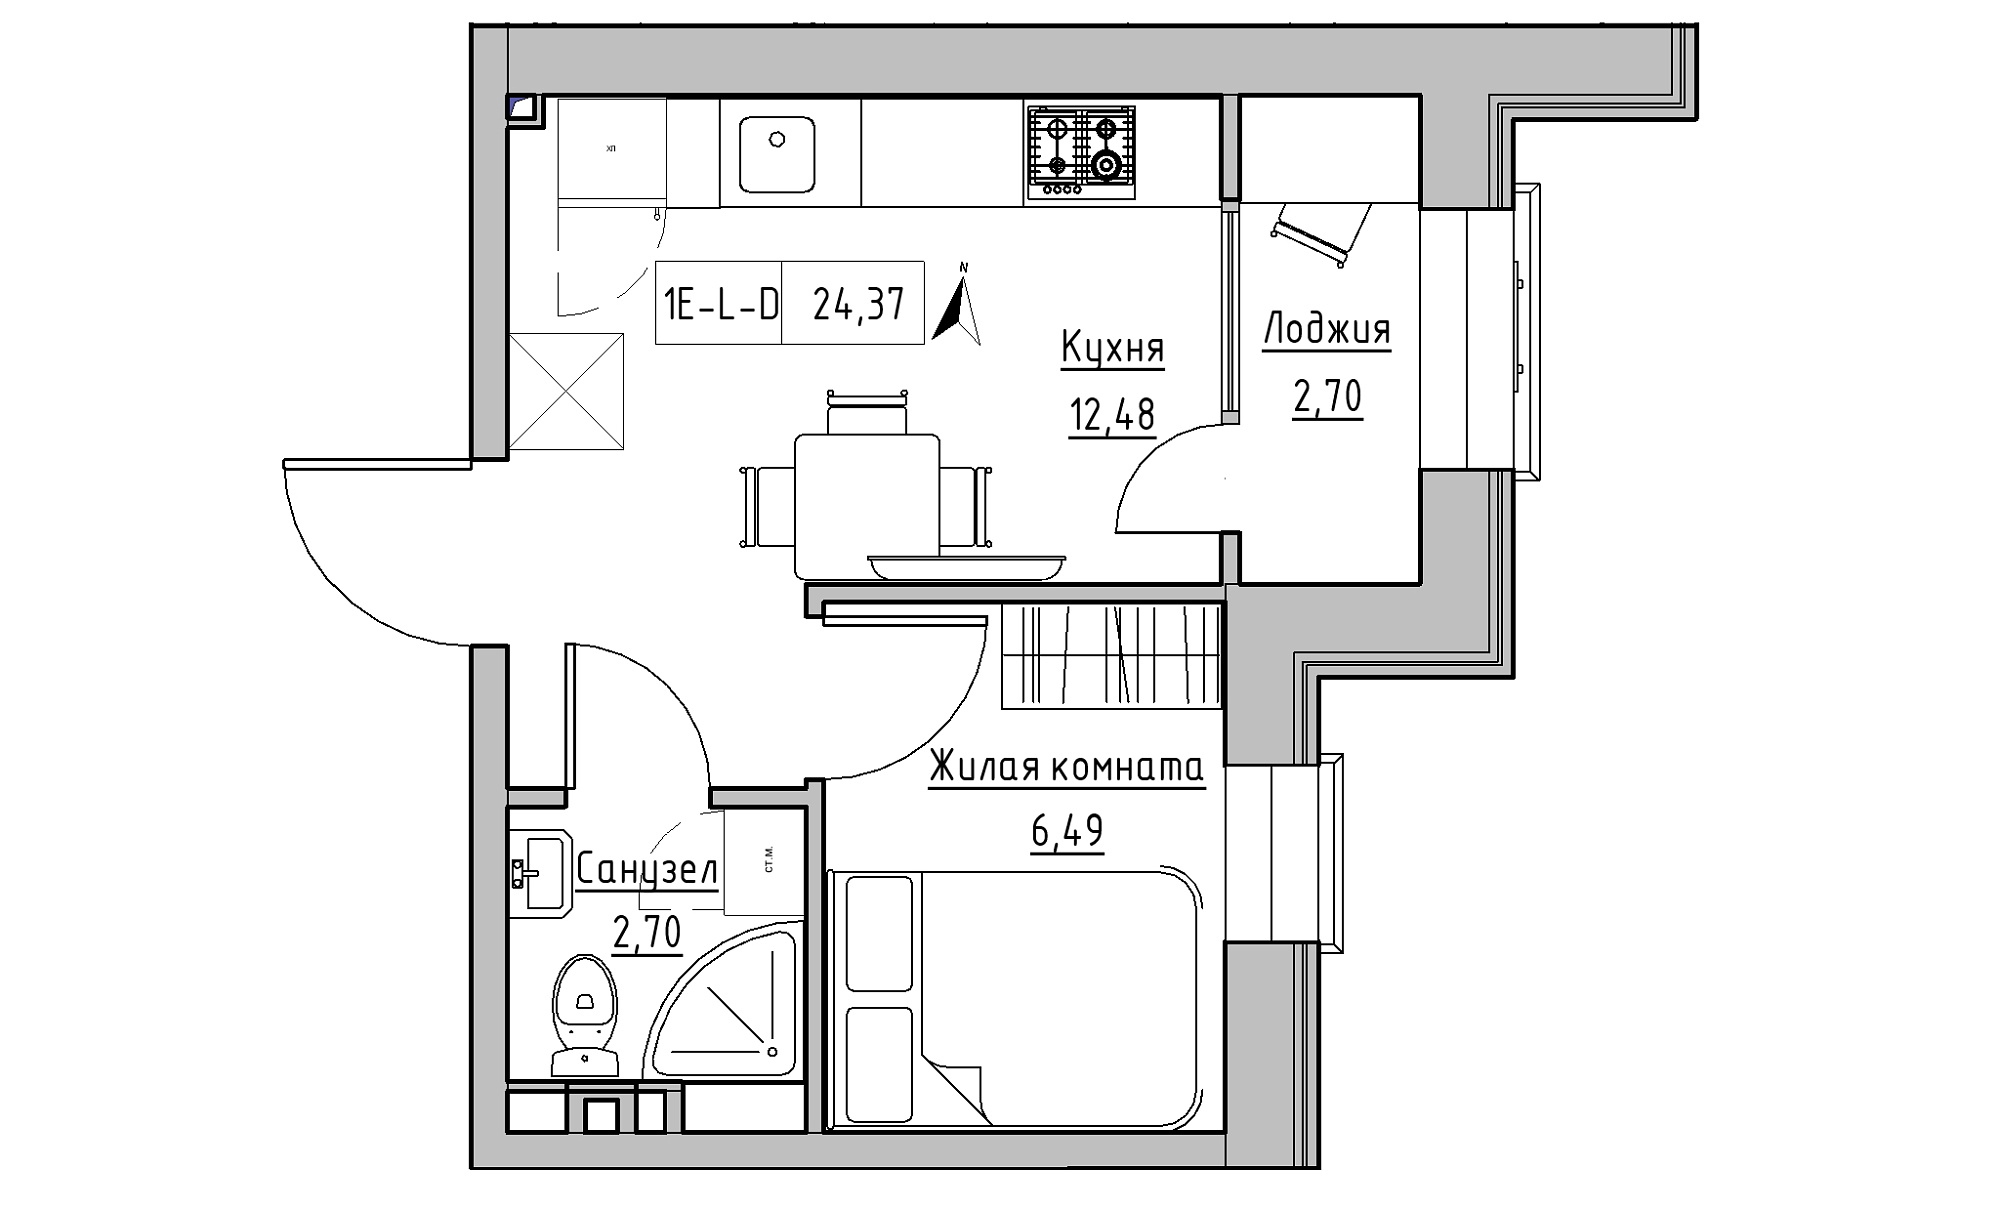 Planning 1-rm flats area 24.37m2, KS-016-05/0018.